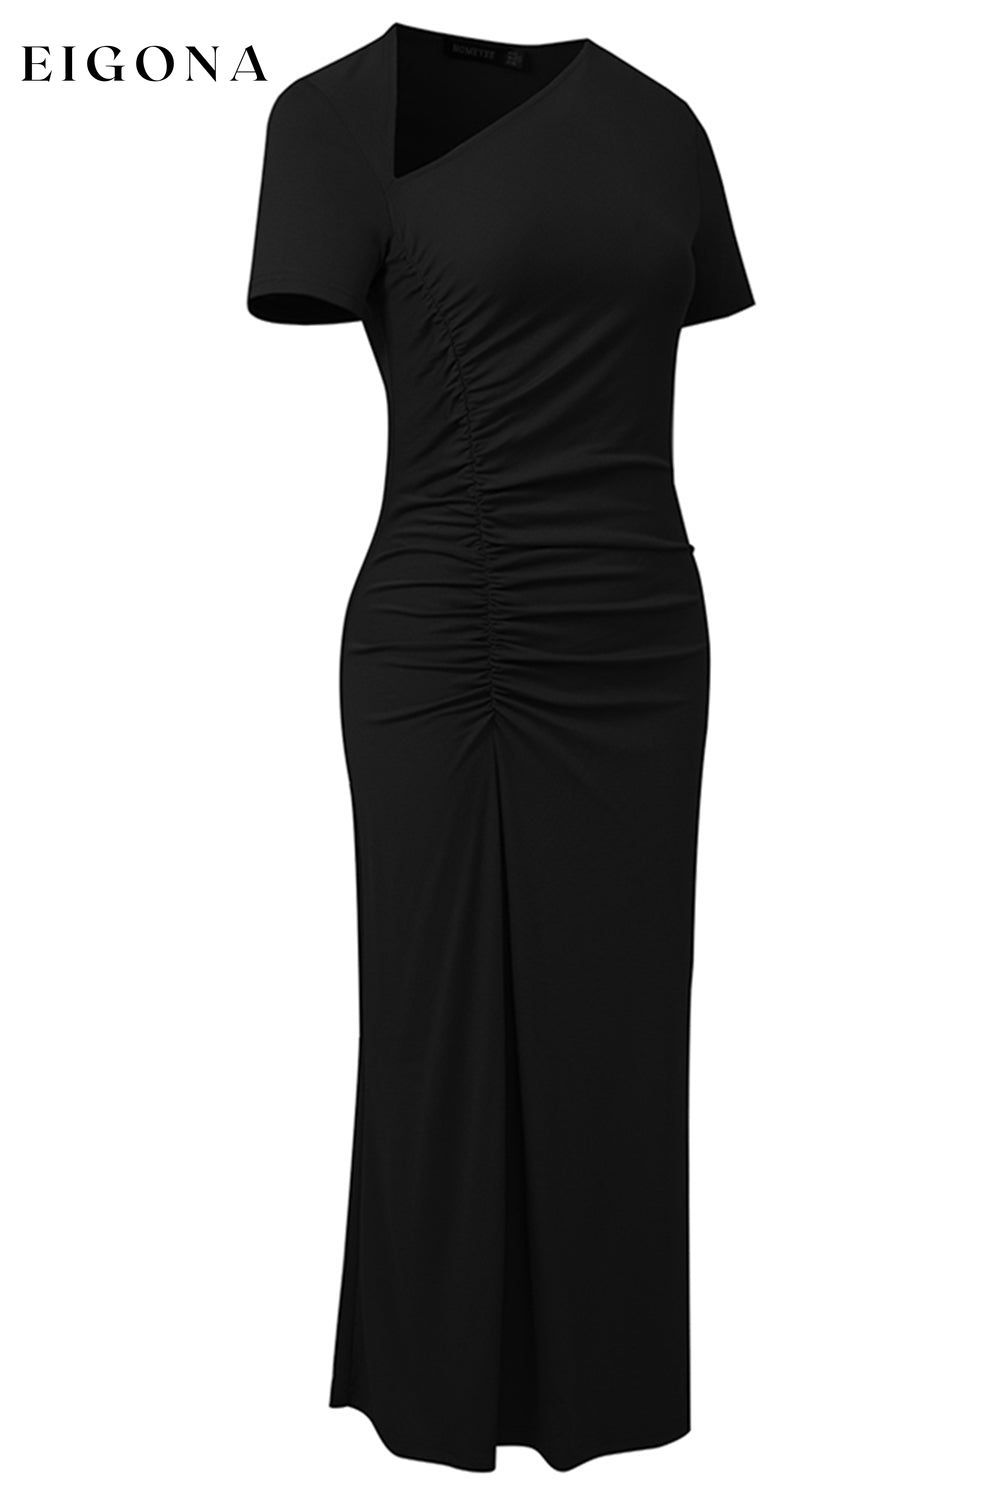 Asymmetrical Neck Short Sleeve Black Midi Dress A&Y.S casual dresses clothes dress dresses evening dress evening dresses midi dress Ship From Overseas Shipping Delay 09/29/2023 - 10/01/2023 trend